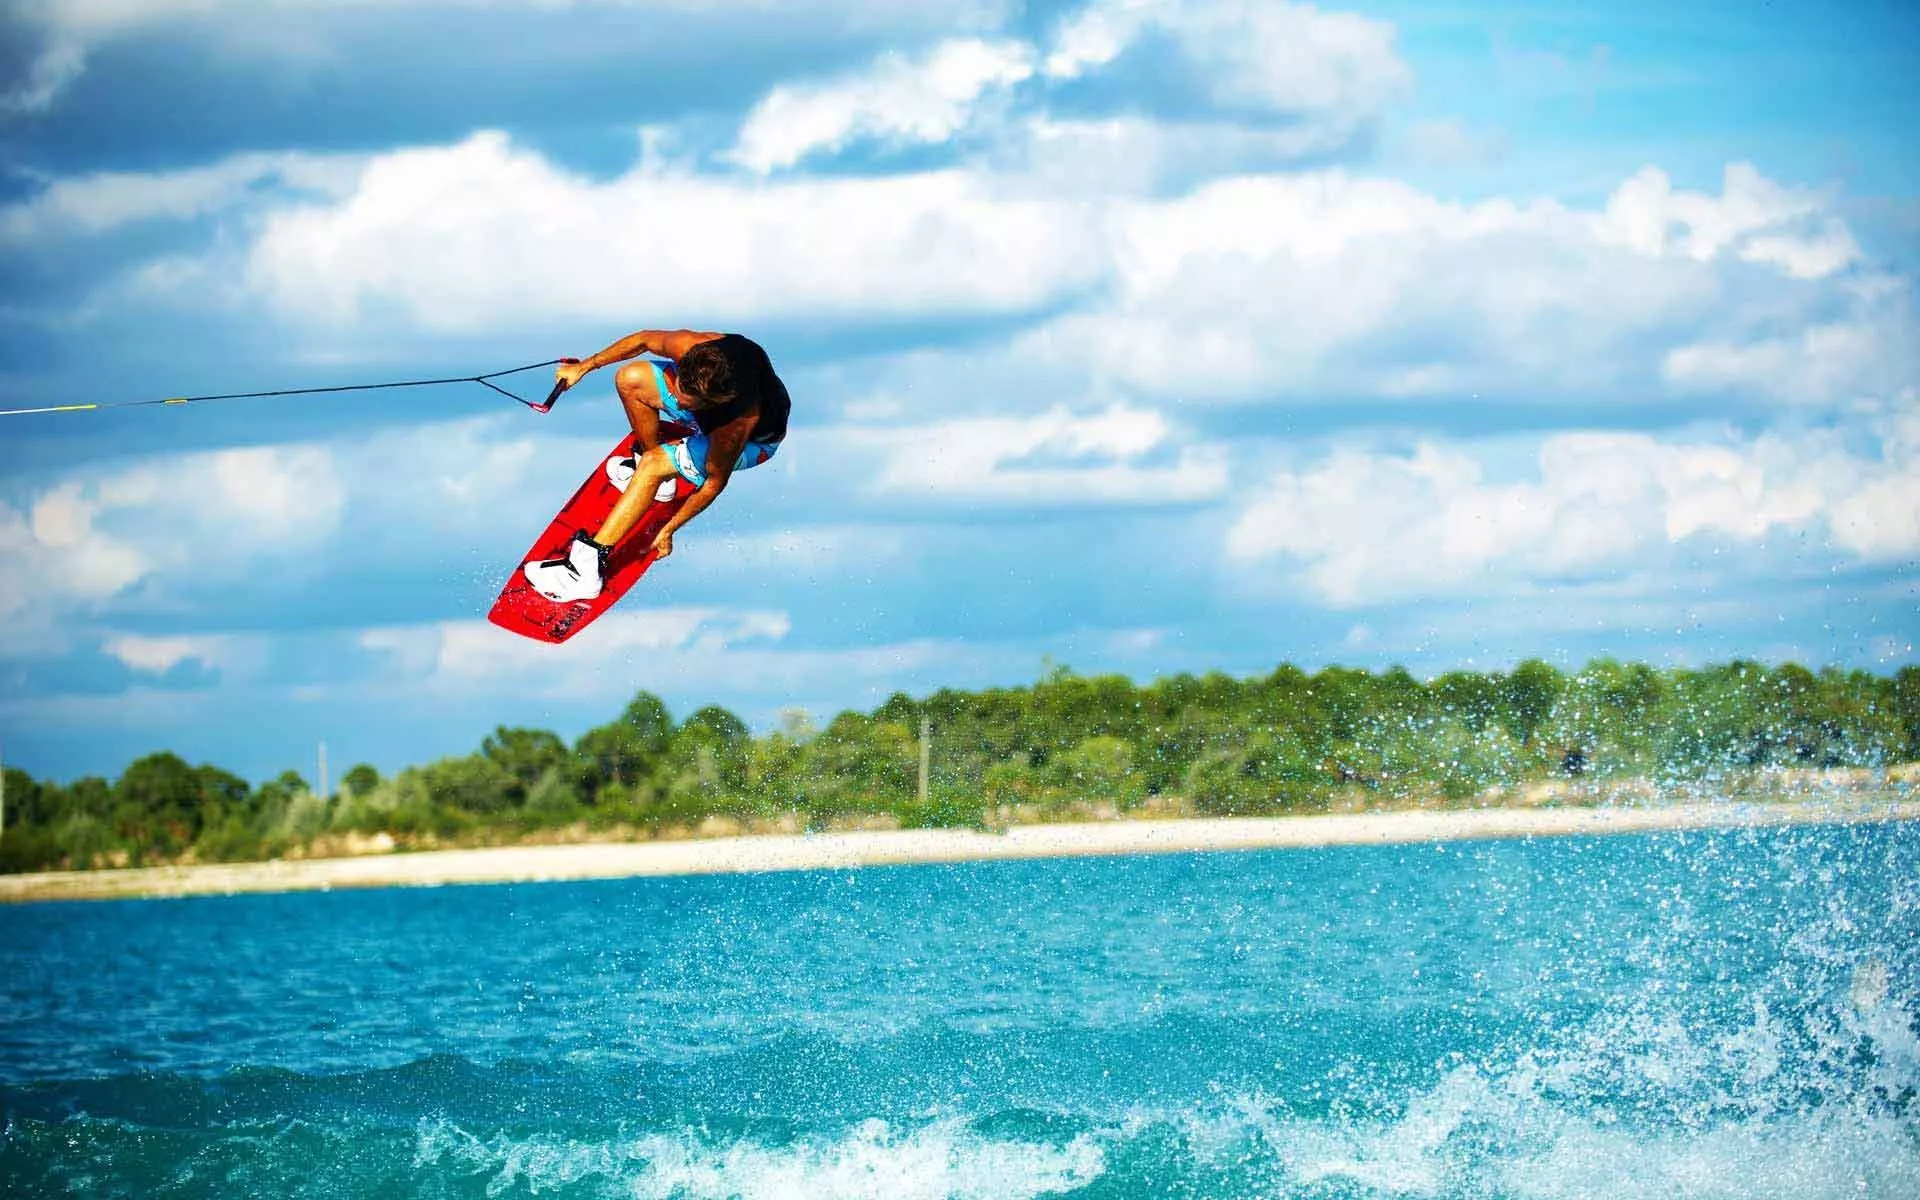 Princara Water Sports in Mexico, North America | Parasailing,Water Skiing,Jet Skiing - Rated 0.9